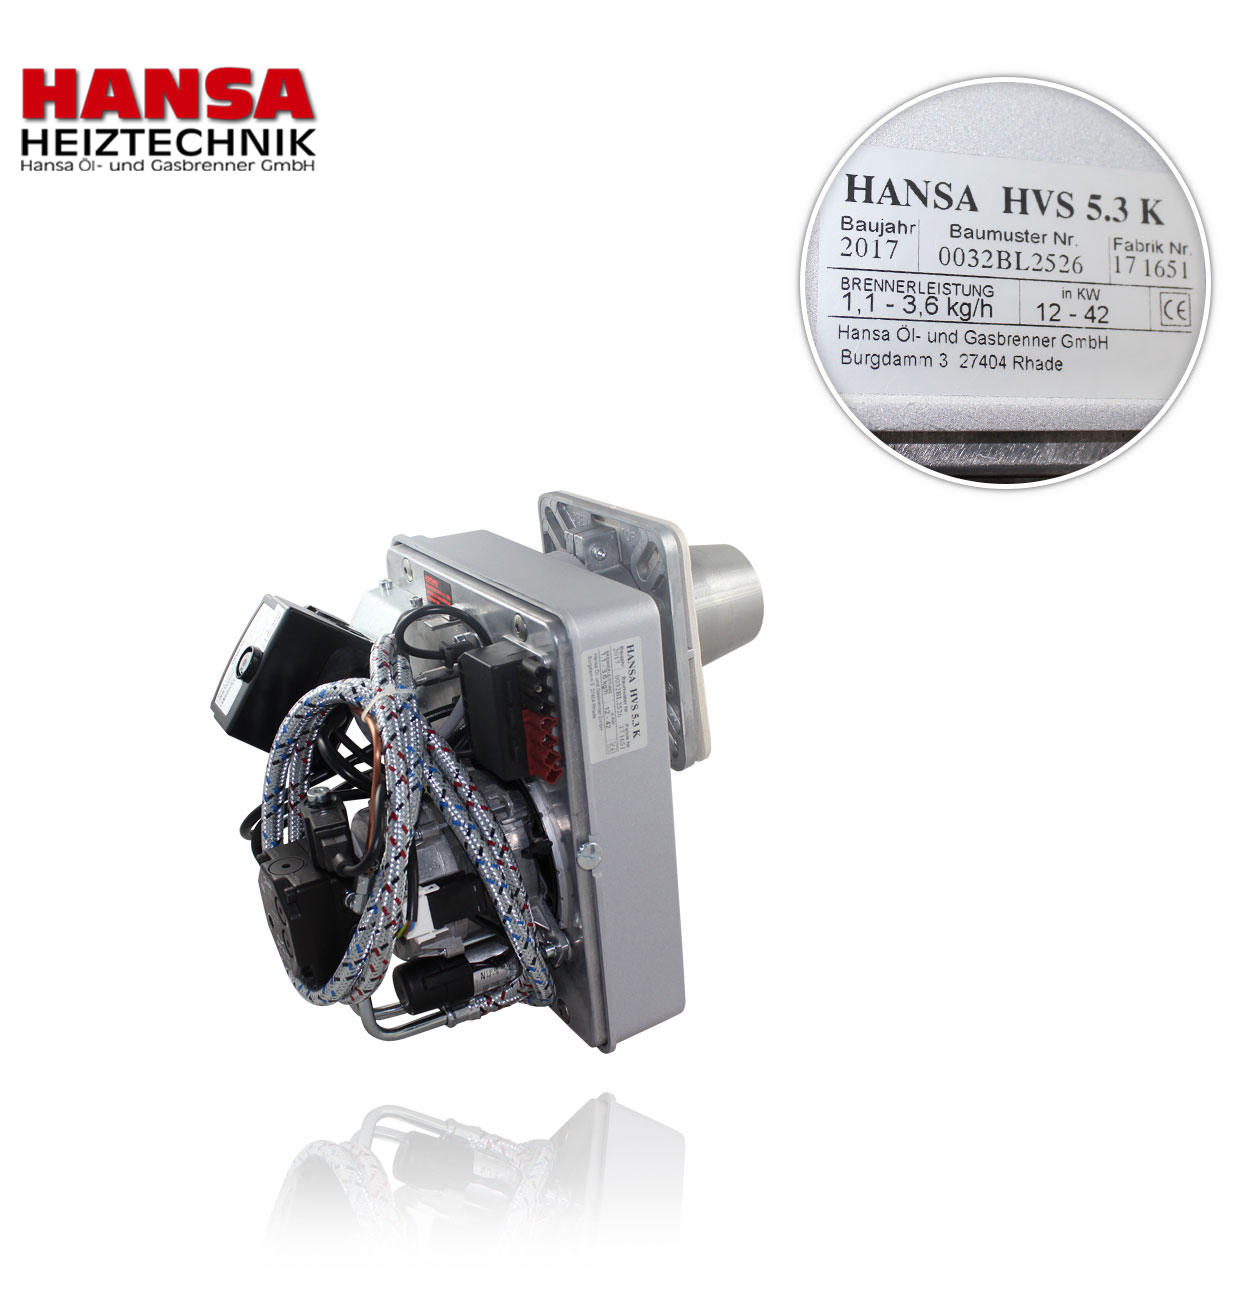 HVS 5.3 K 13-42kw with HANSA preheater